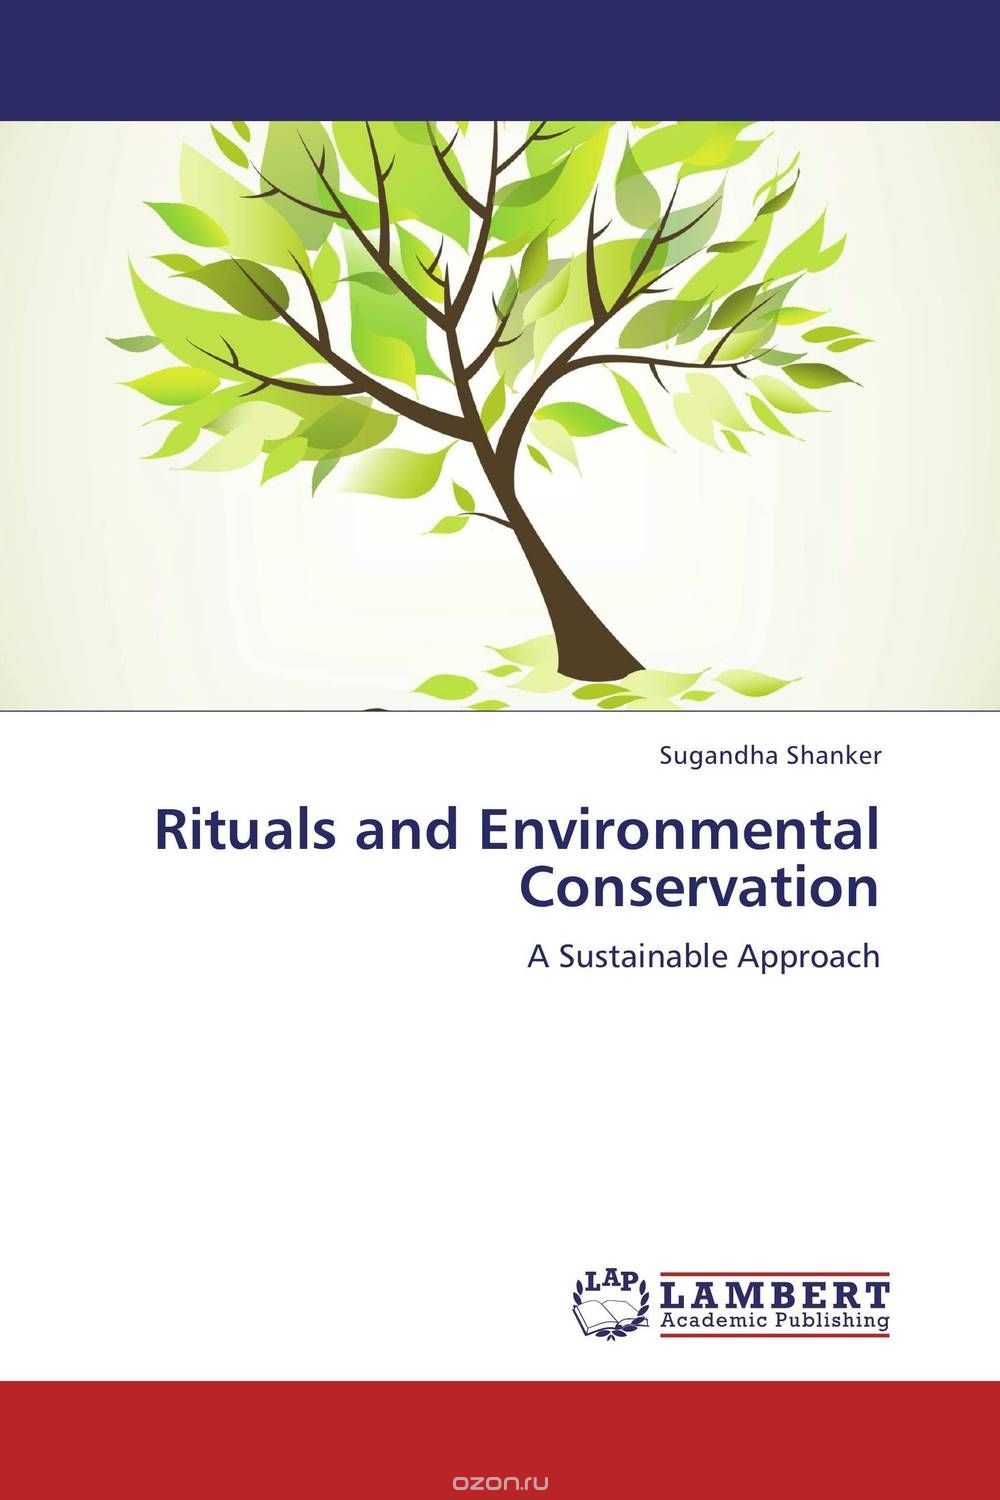 Скачать книгу "Rituals and Environmental Conservation"